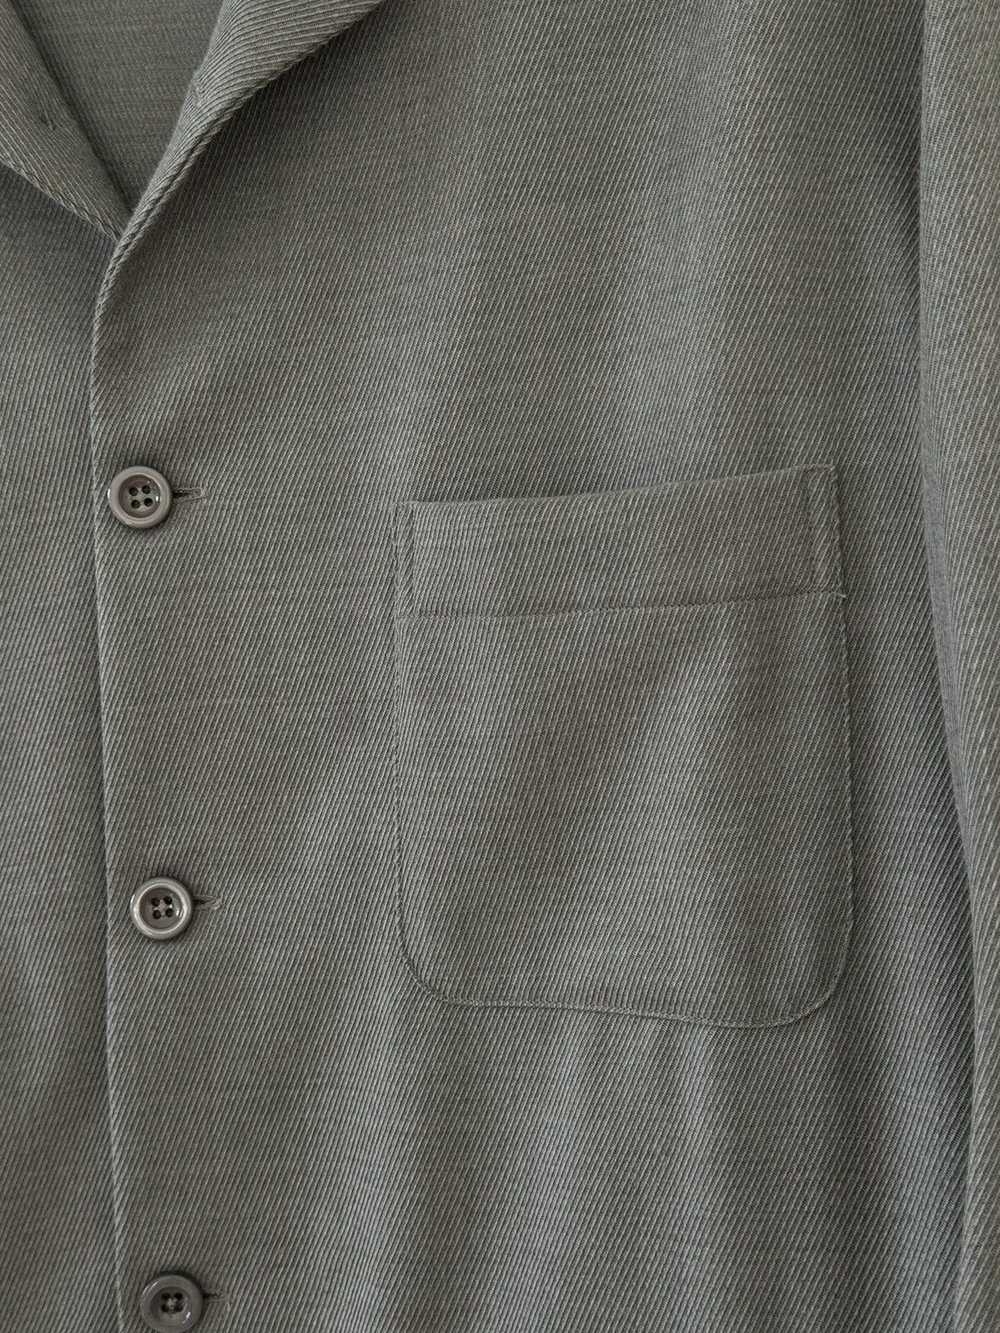 4sdesigns Long-Sleeve Wool Shirt Blazer SS22 50 - image 3